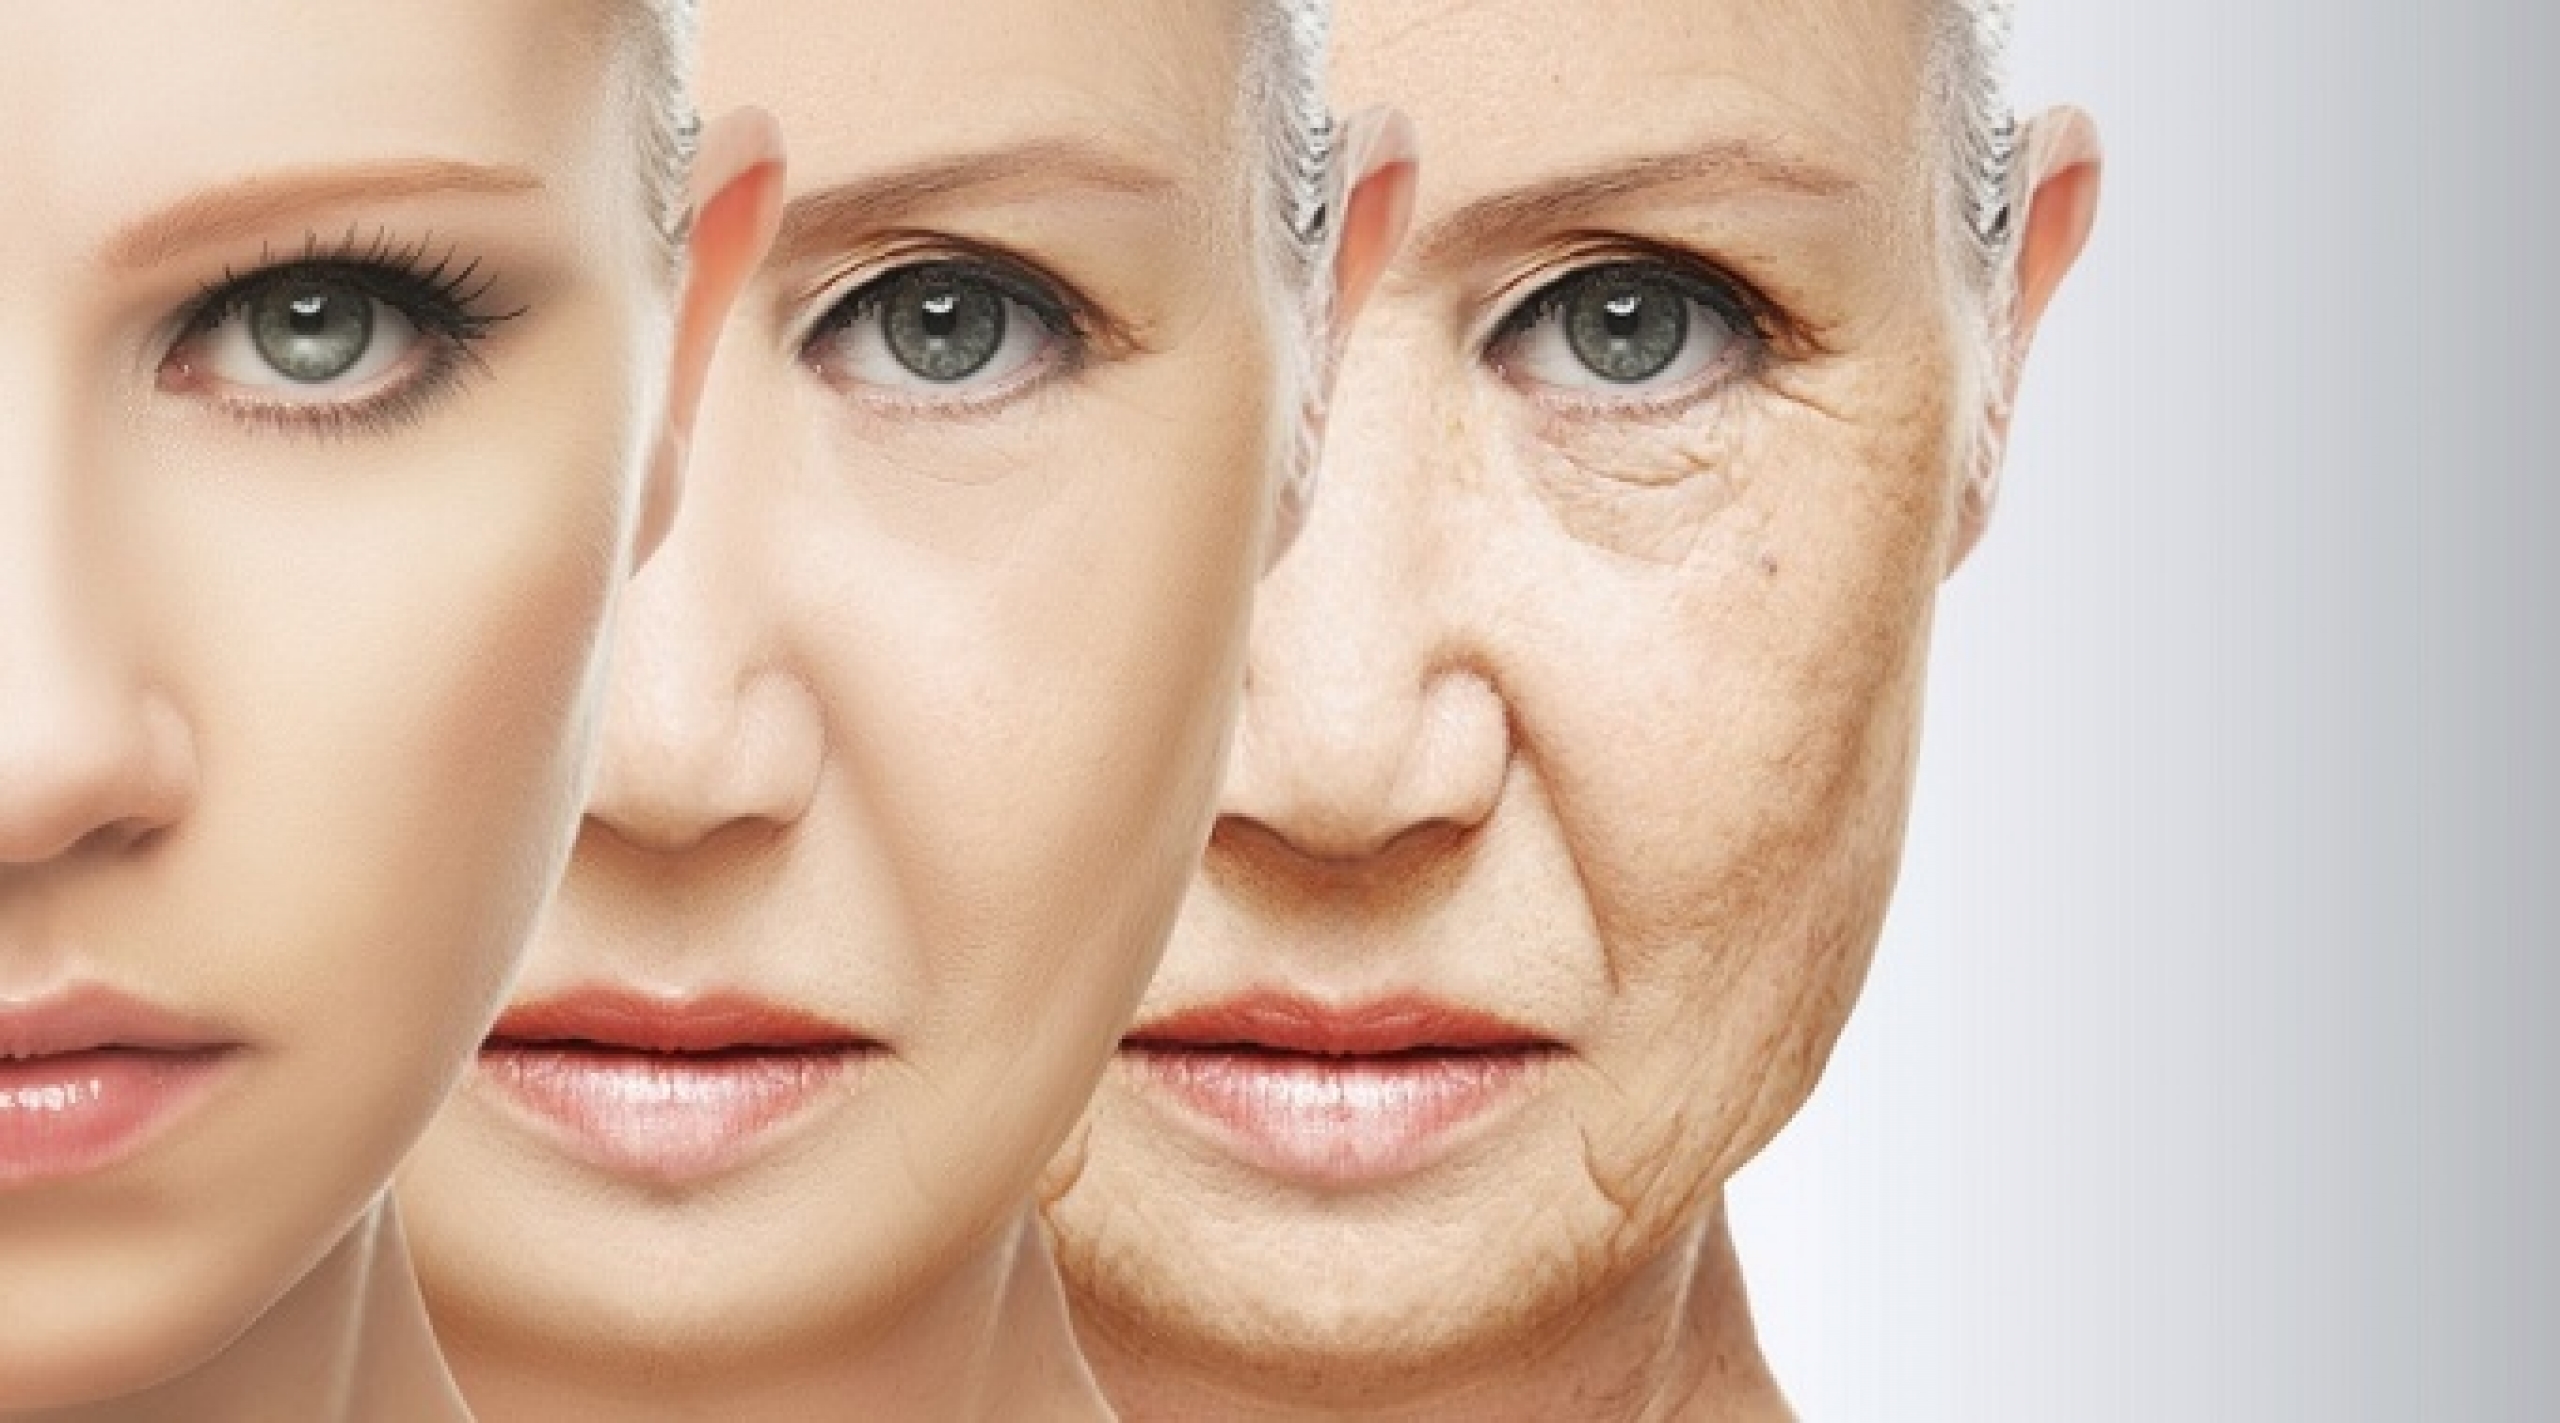 Состояние кожи лица в процессе старения